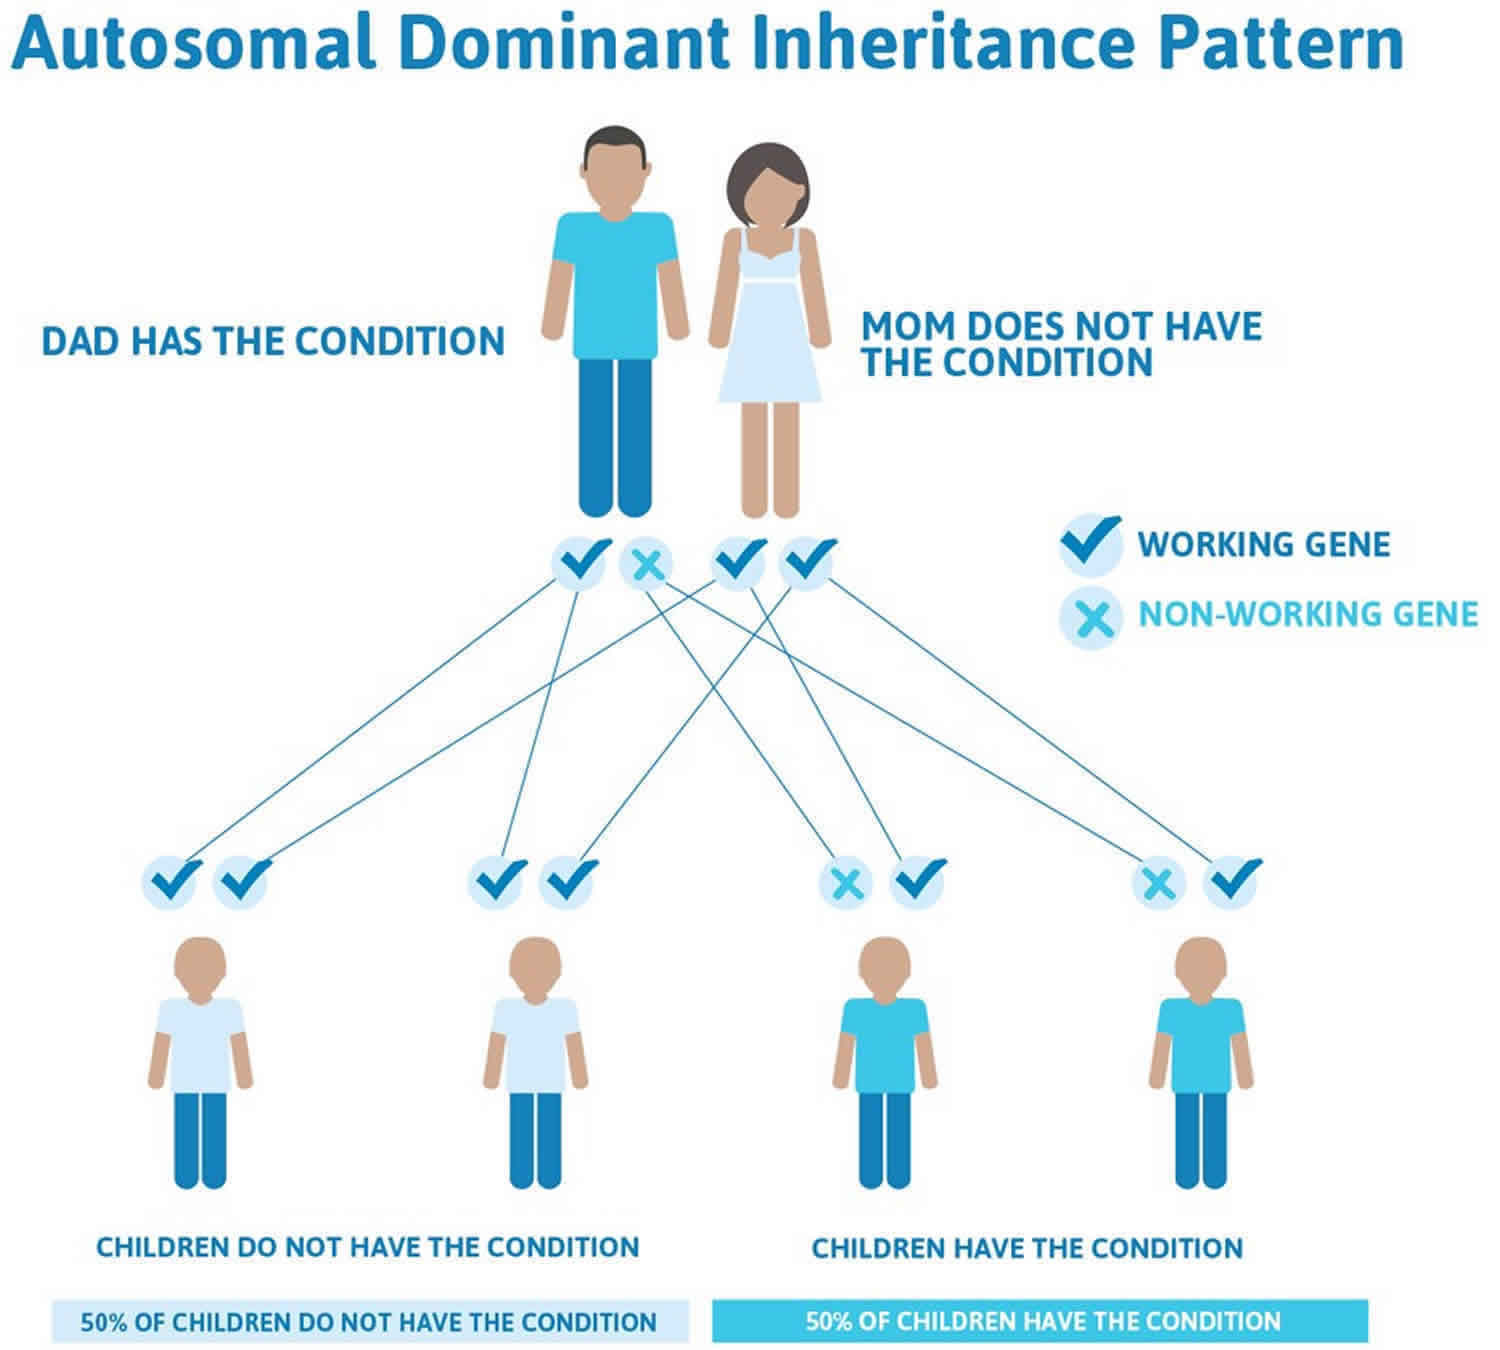 Nail-patella syndrome autosomal dominant inheritance pattern